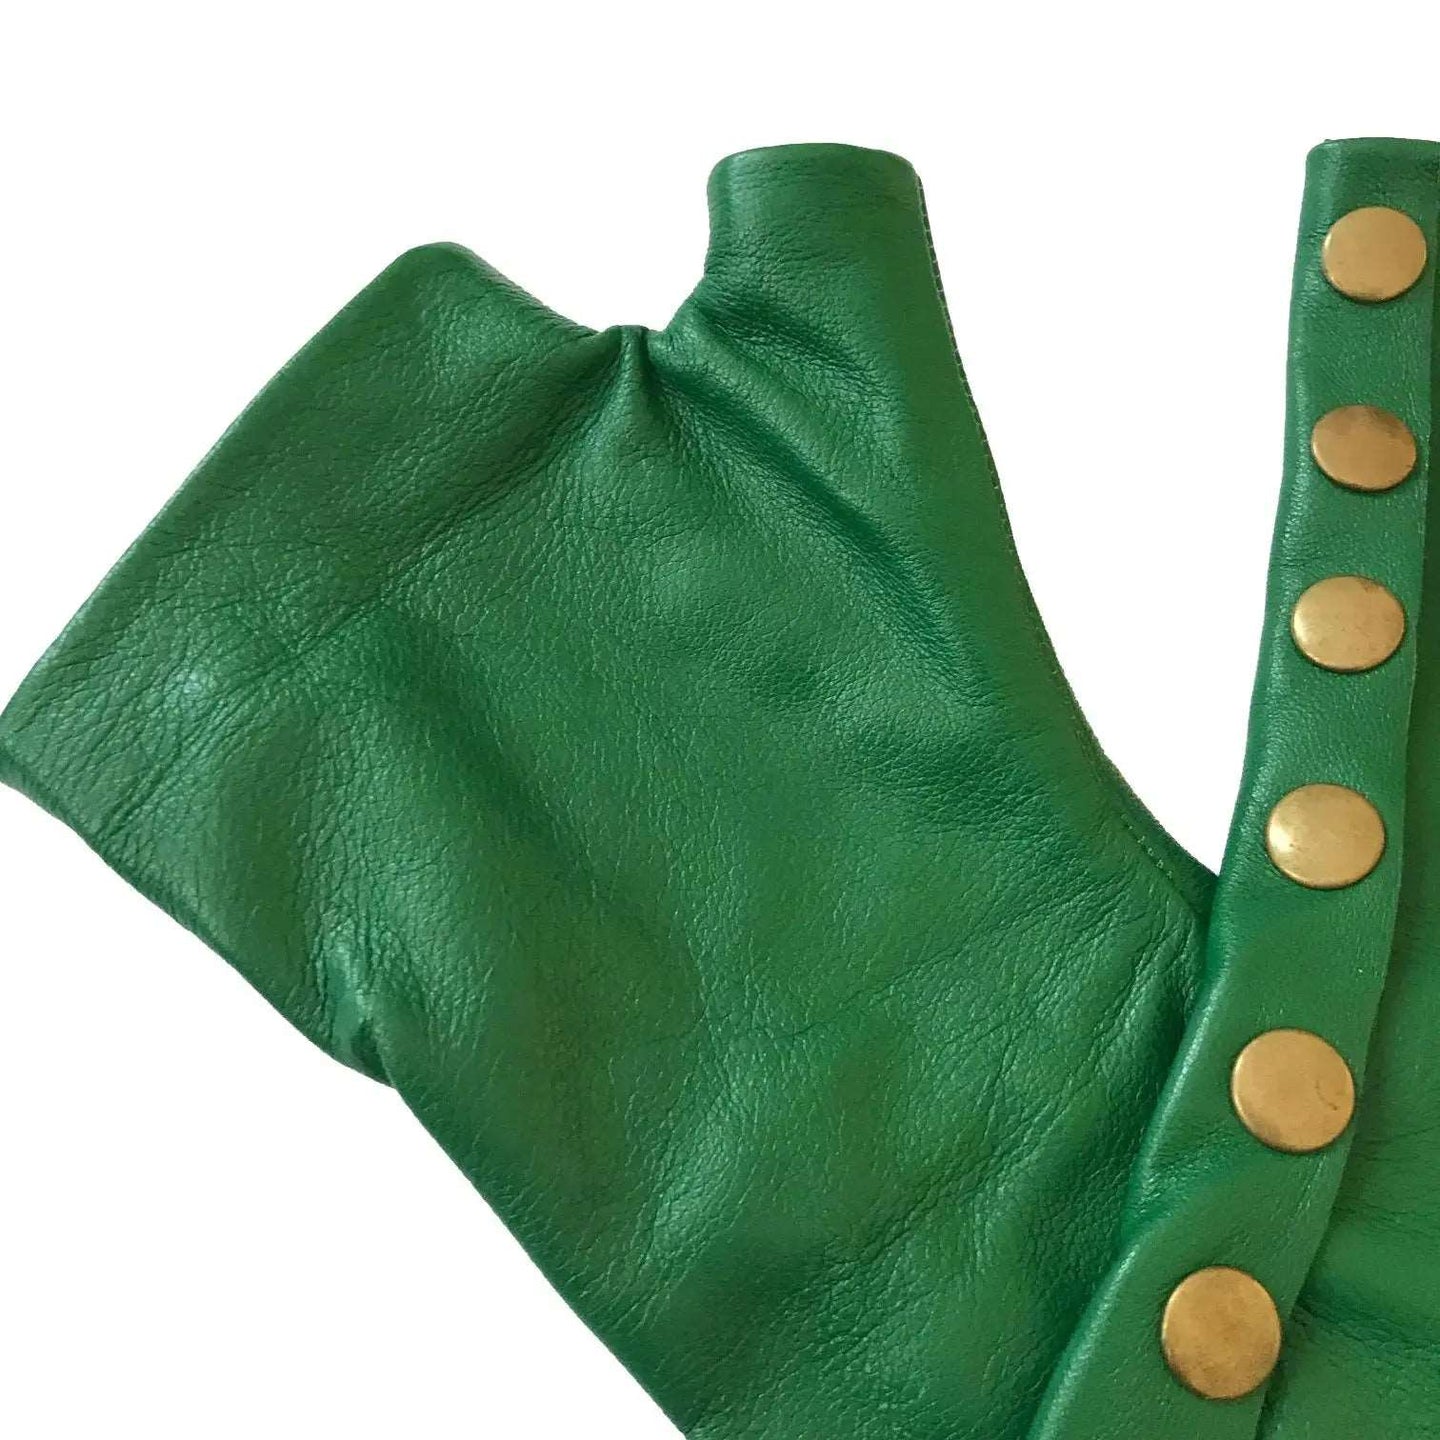 Green Gloves Handmade Accessories